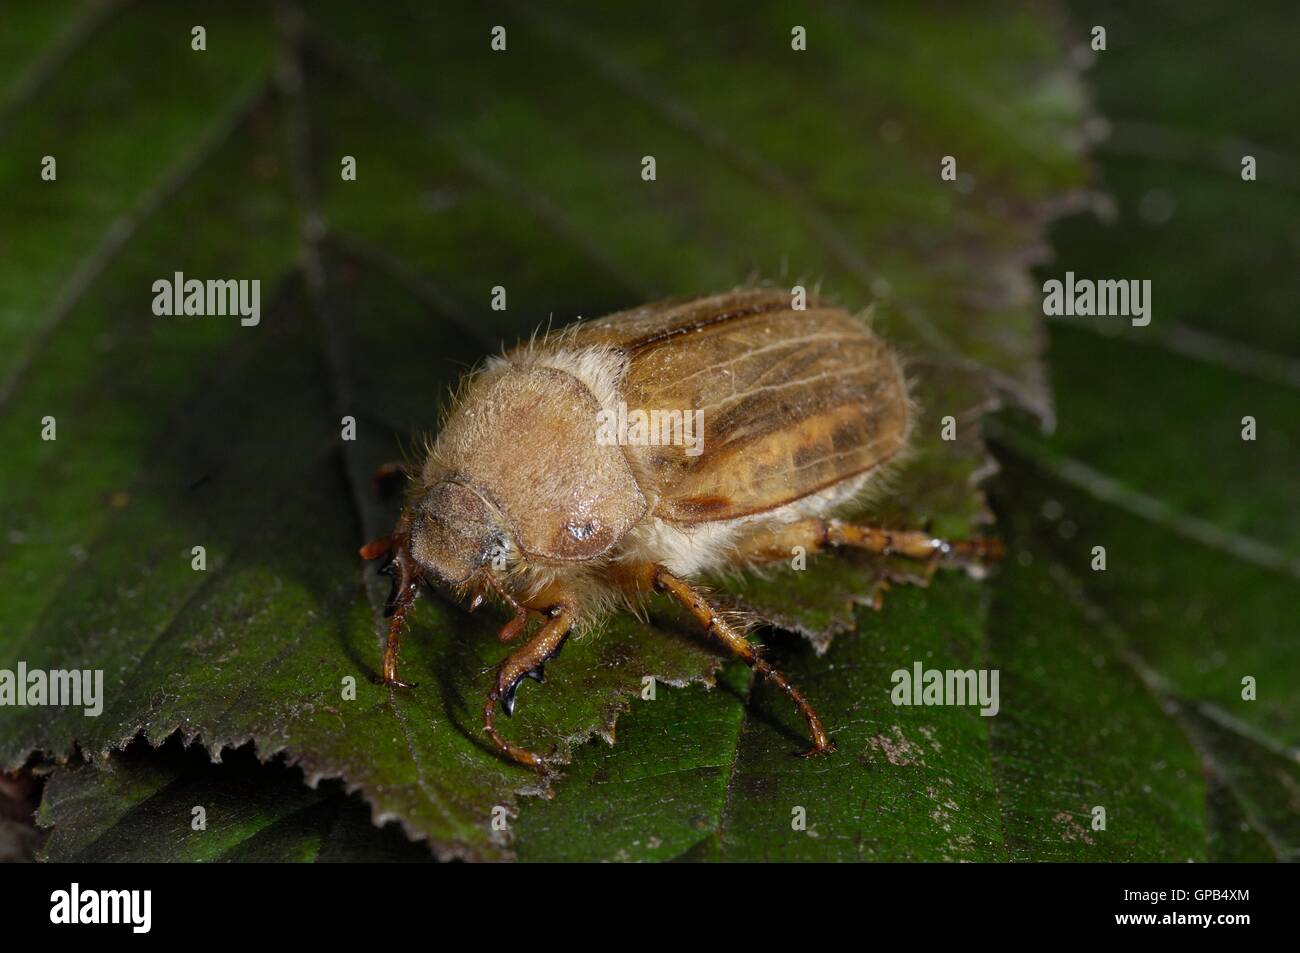 European June beetle - Summer chafer (Amphimallon solstitialis - Rhizotrogus solstitiale) on a leaf at spring Stock Photo